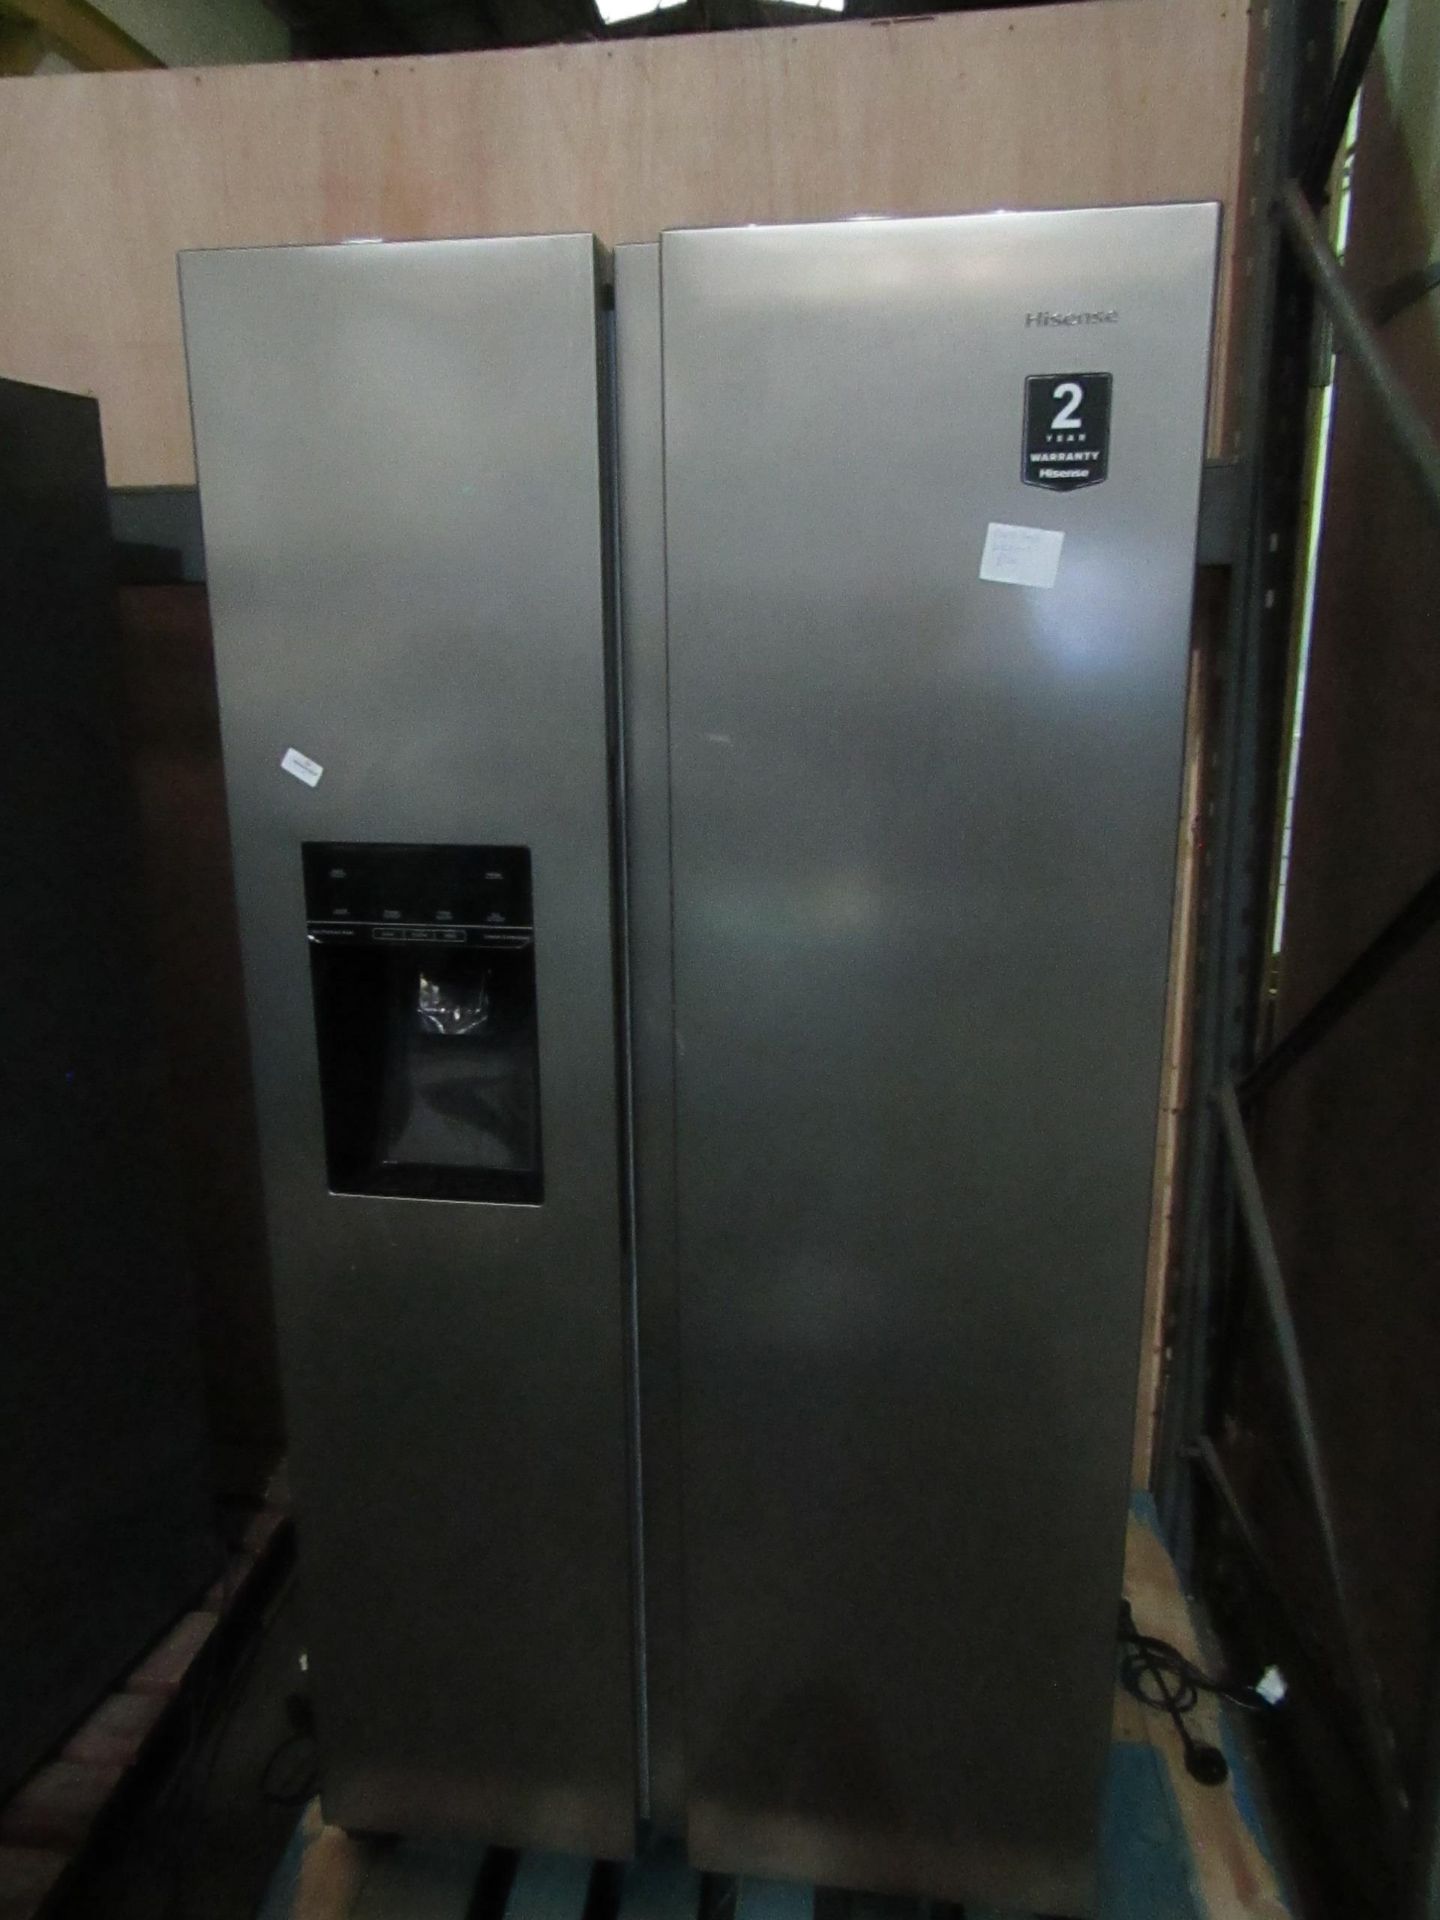 Hisense American Style fridge freezer, unable to check as plug is damaged